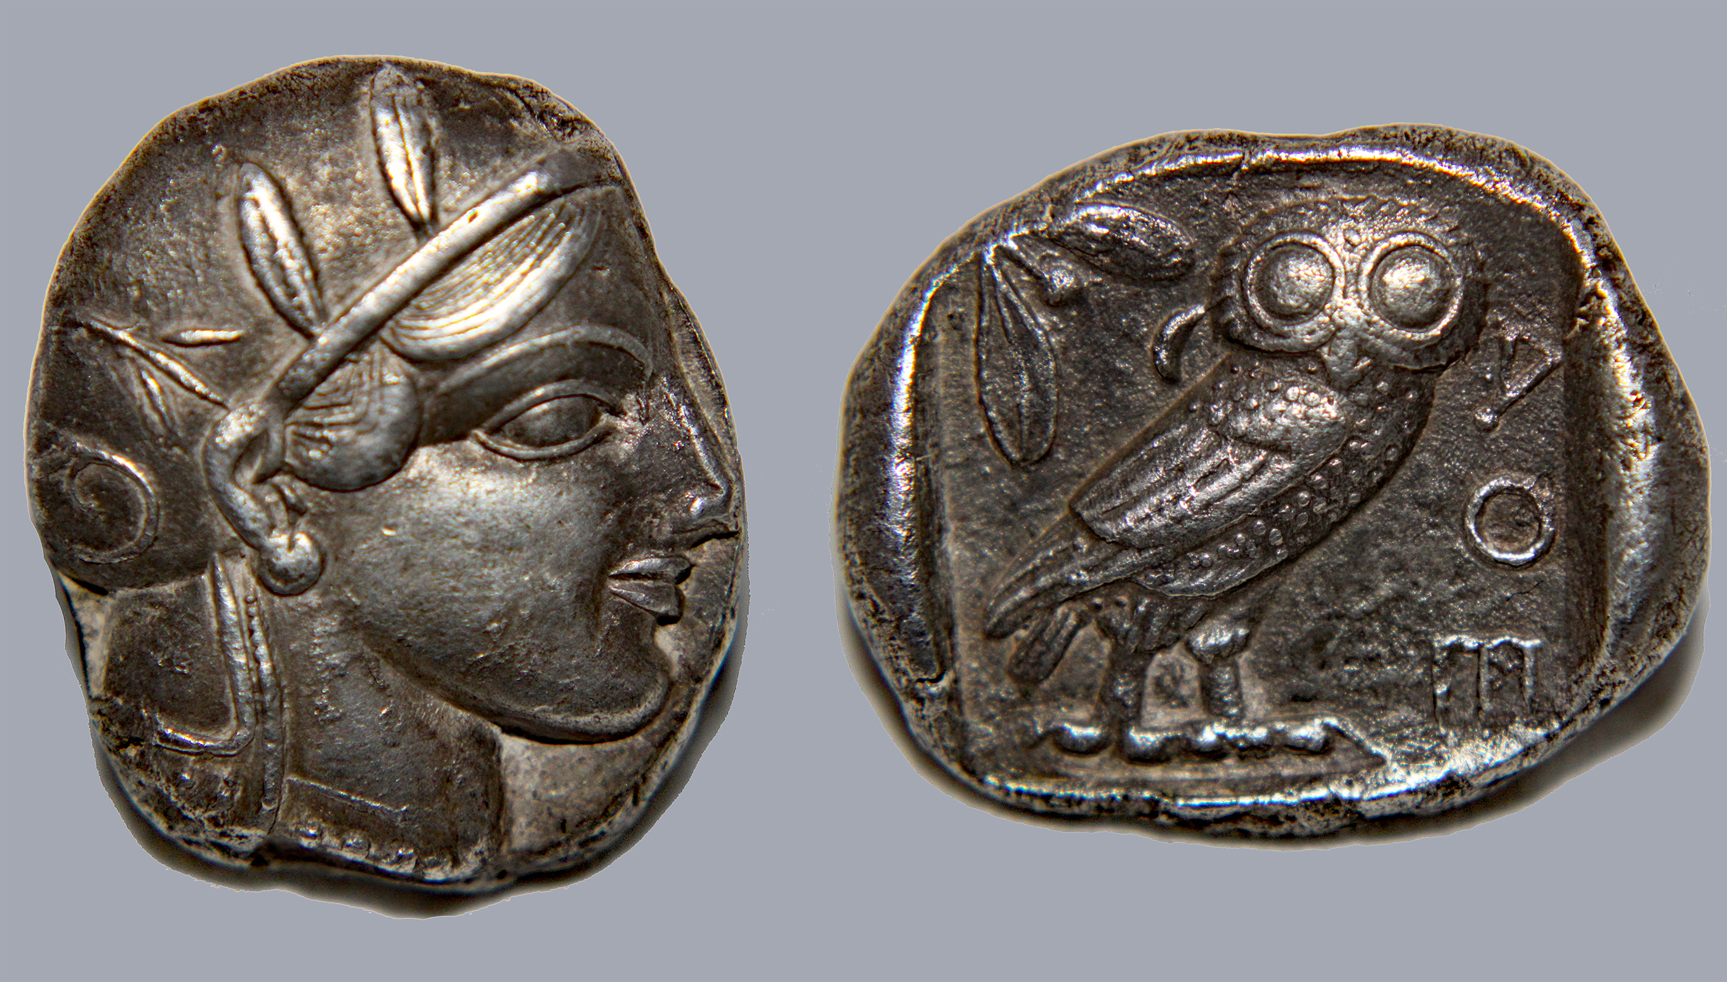 D-Camera Athens Tetradrachm, Prefectus, c. 450 BC, reduced image 11-15-20.jpg